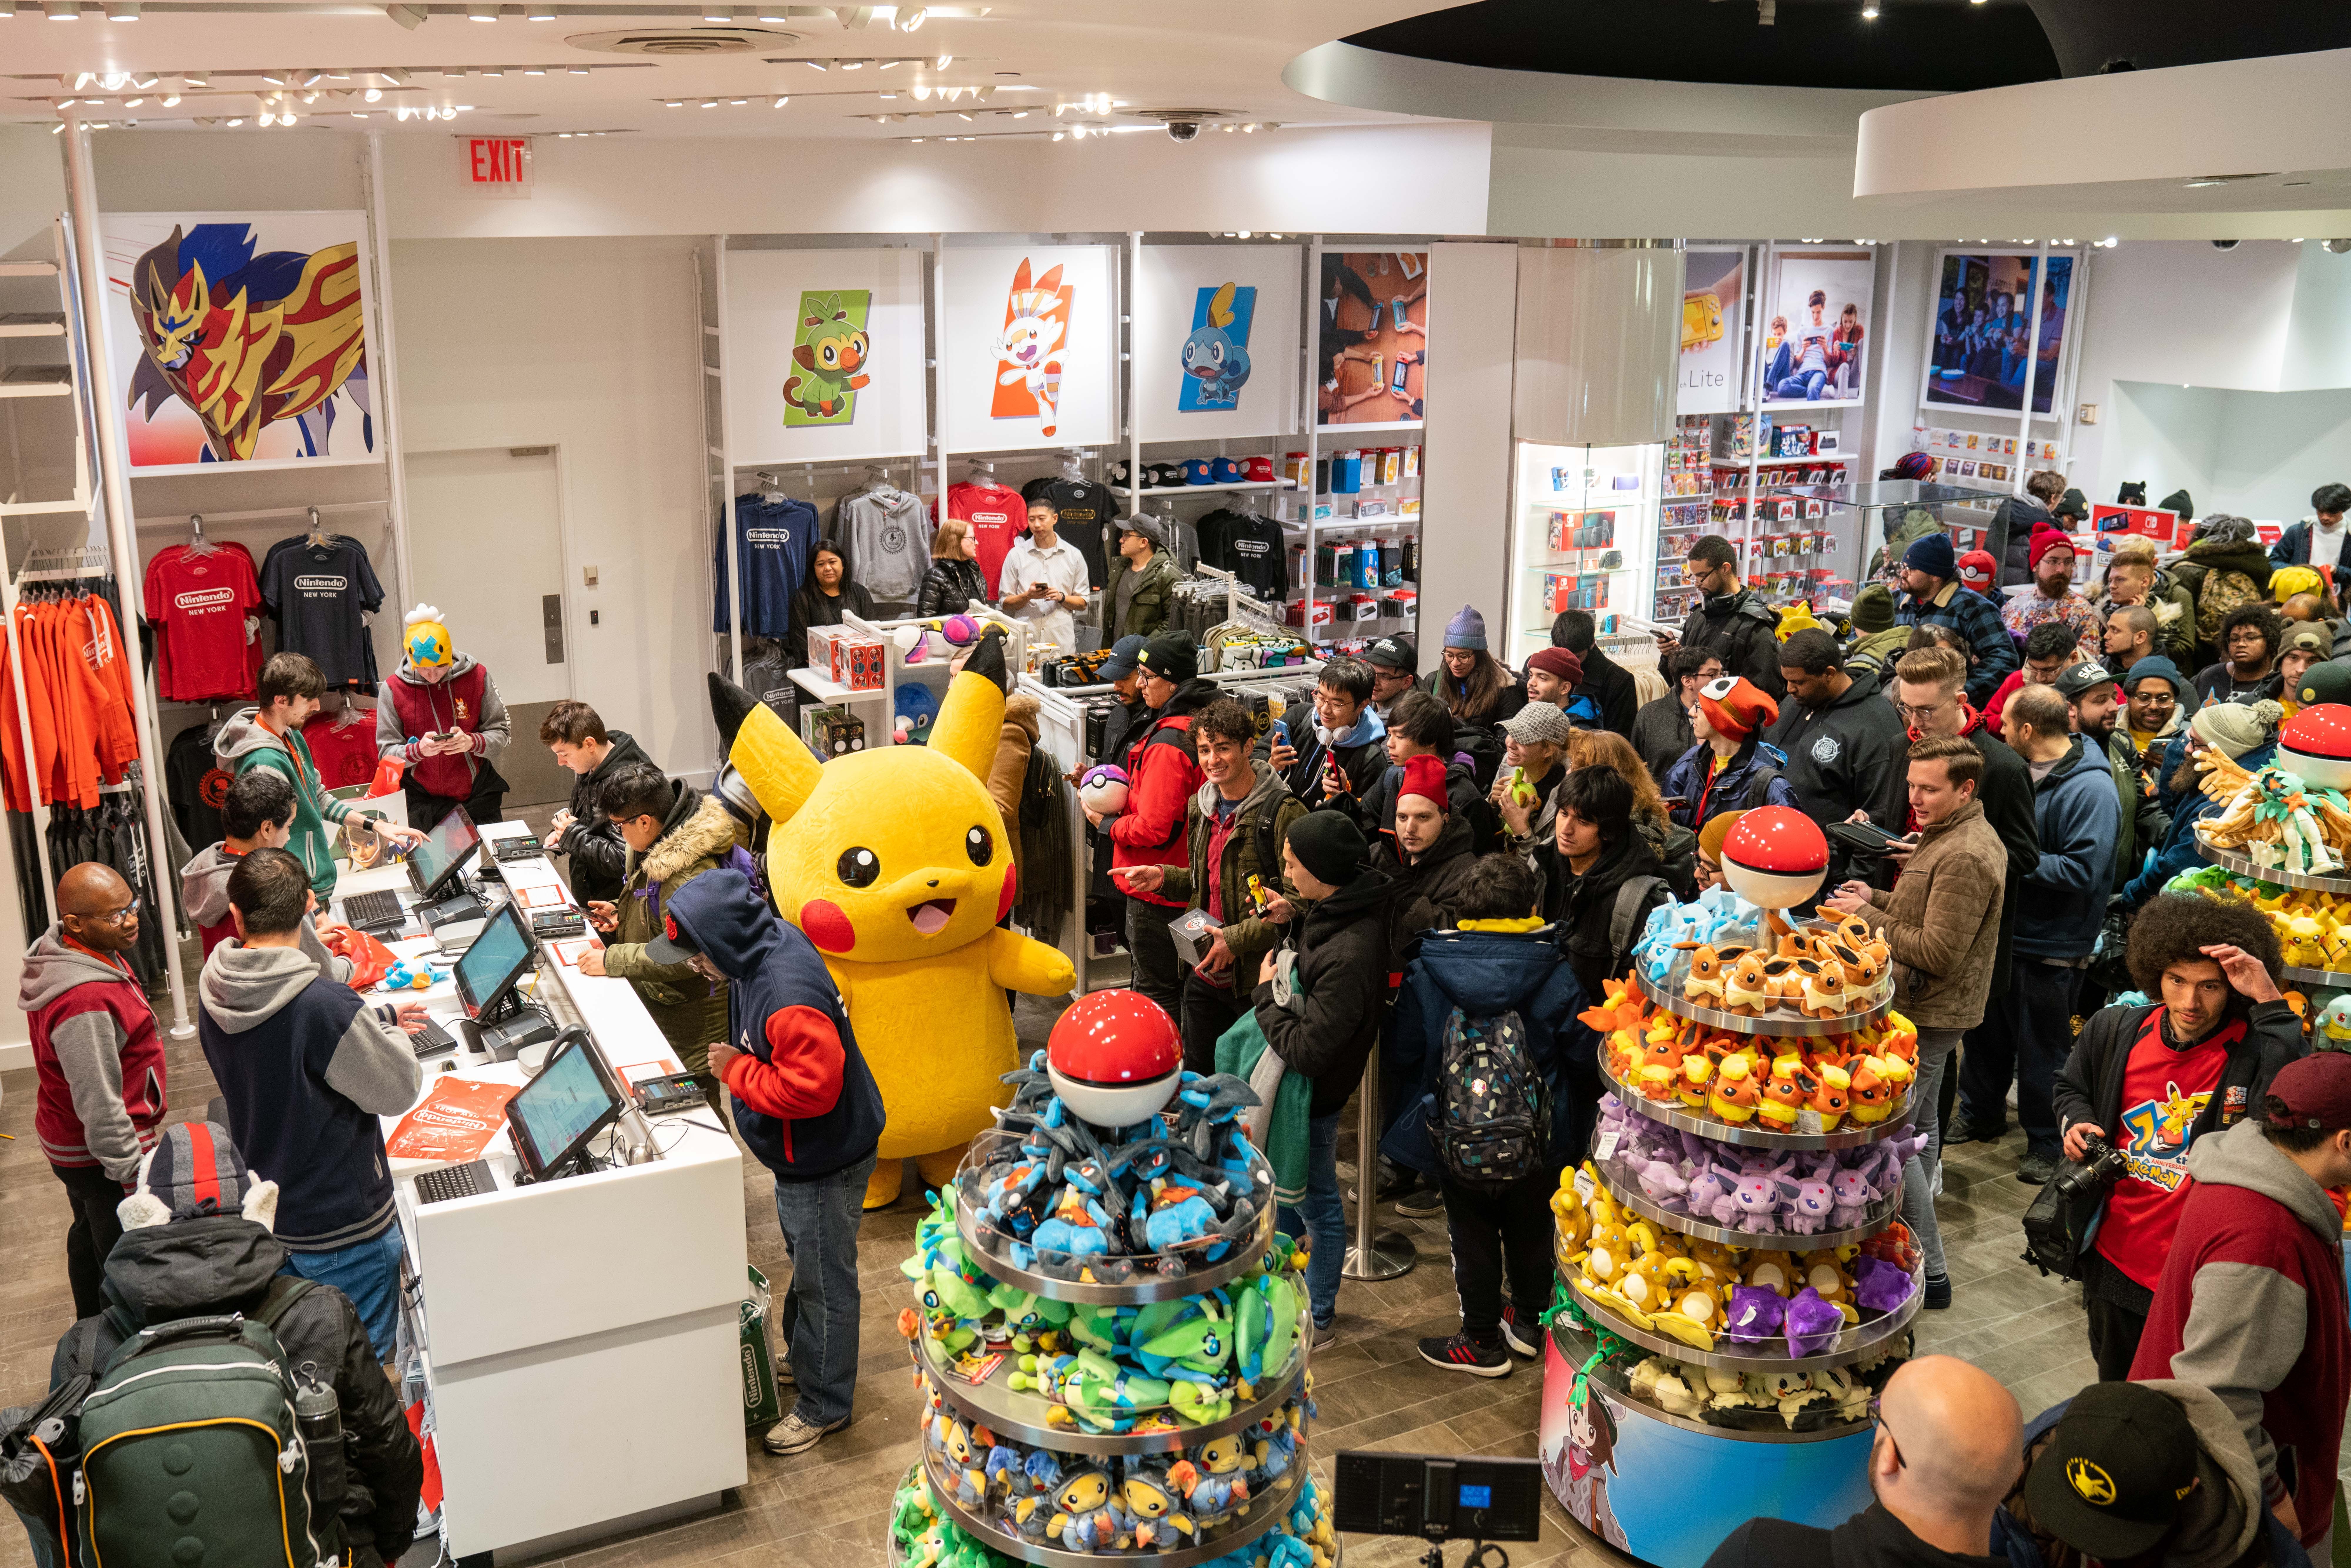 Photos of the Pokémon Sword and Pokémon Shield Launch Event at